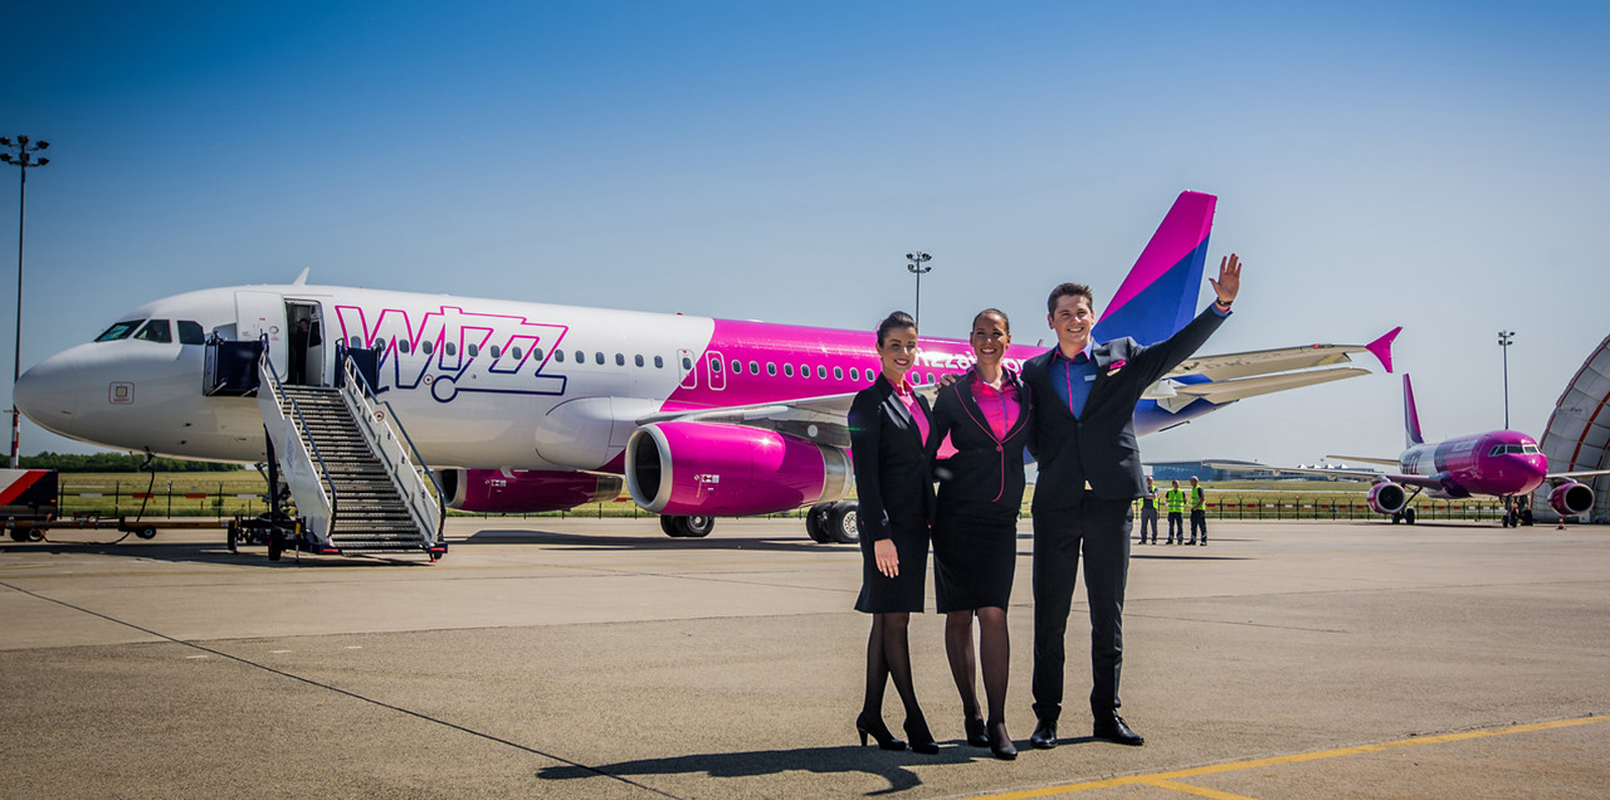 W iz. Wizz Air ливрея. Wizz Air авиакомпания самолет. Европейский лоукостер Wizz Air. Венгерская авиакомпания Wizzair.